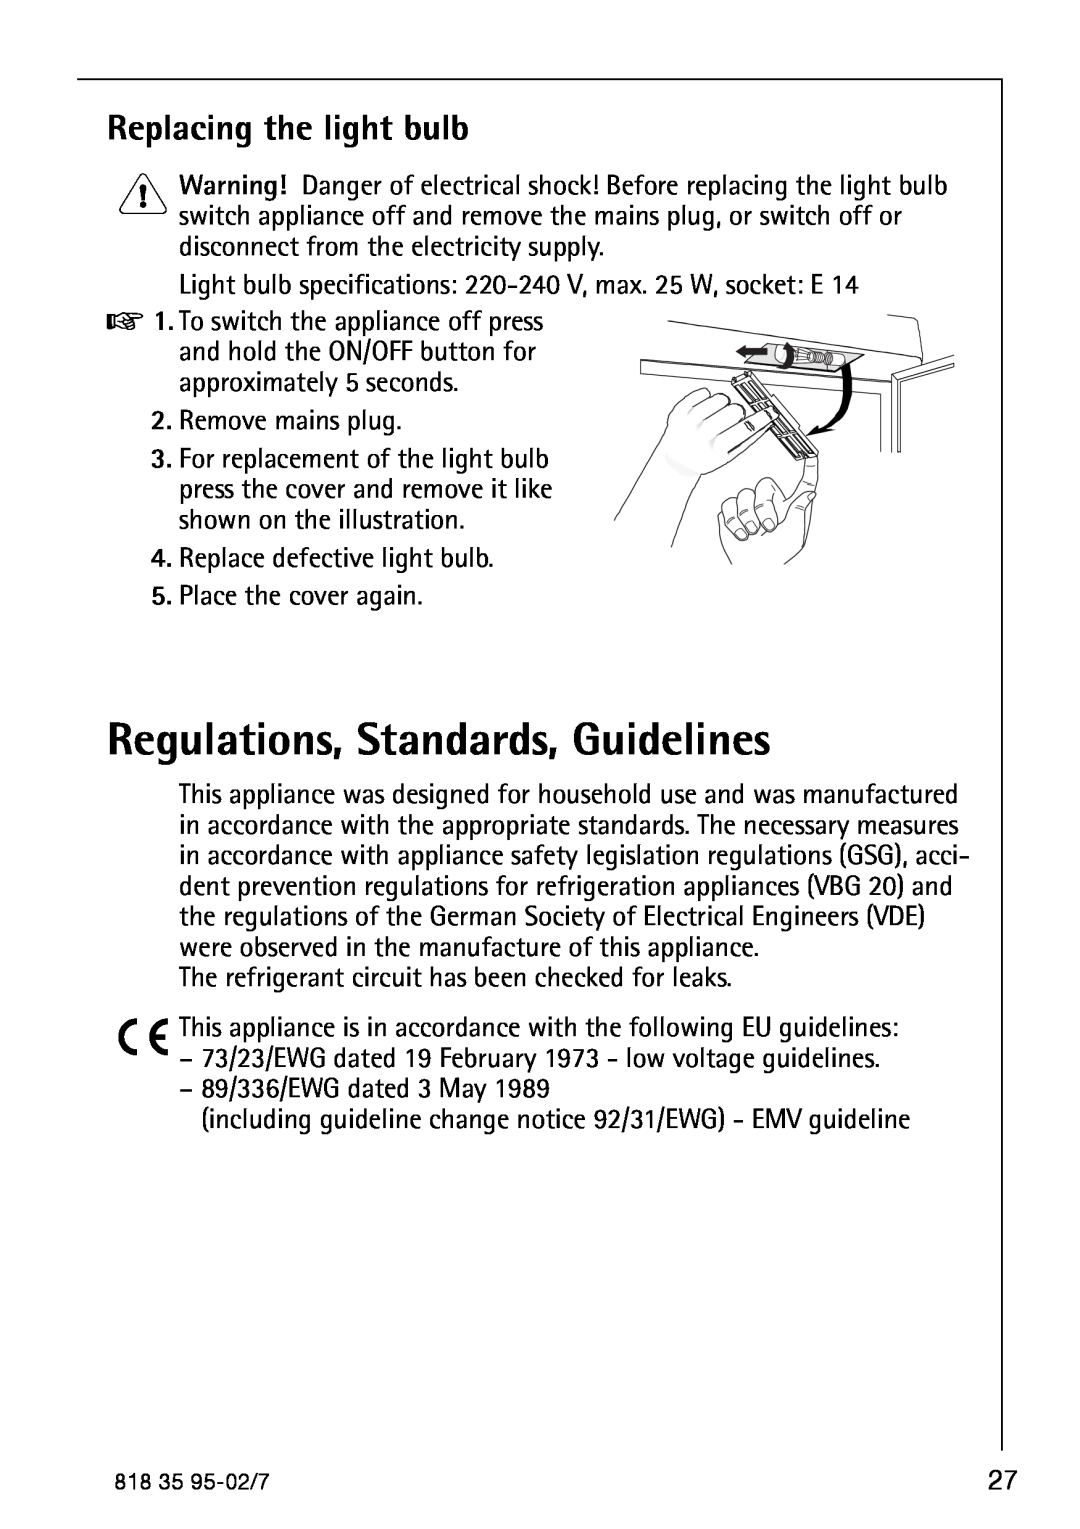 AEG 75248 GA3 manual Regulations, Standards, Guidelines, Replacing the light bulb 